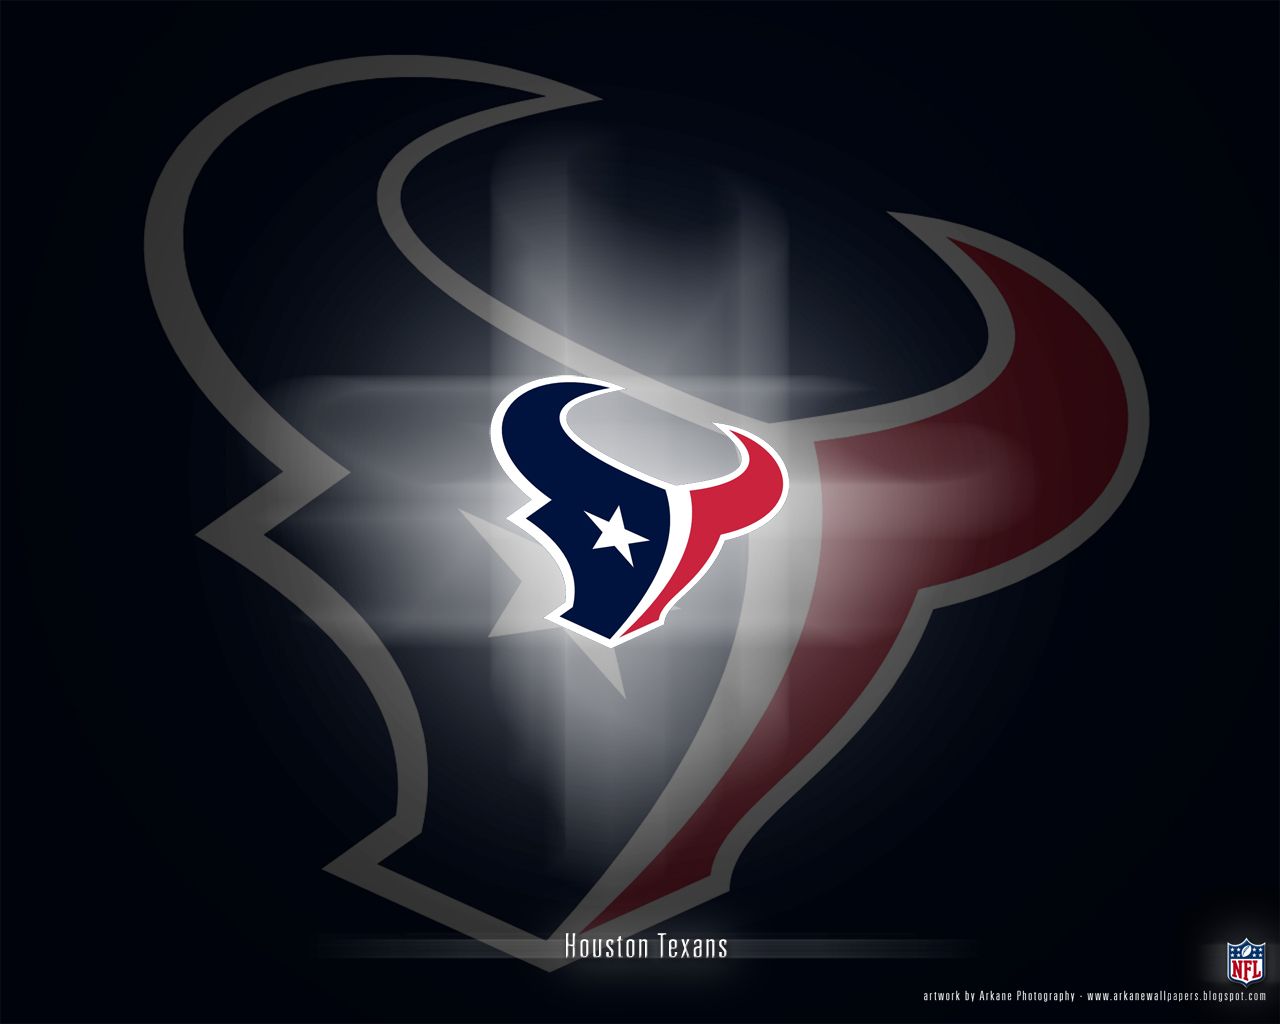 Free download Arkane NFL Wallpaper Houston Texans Vol 1